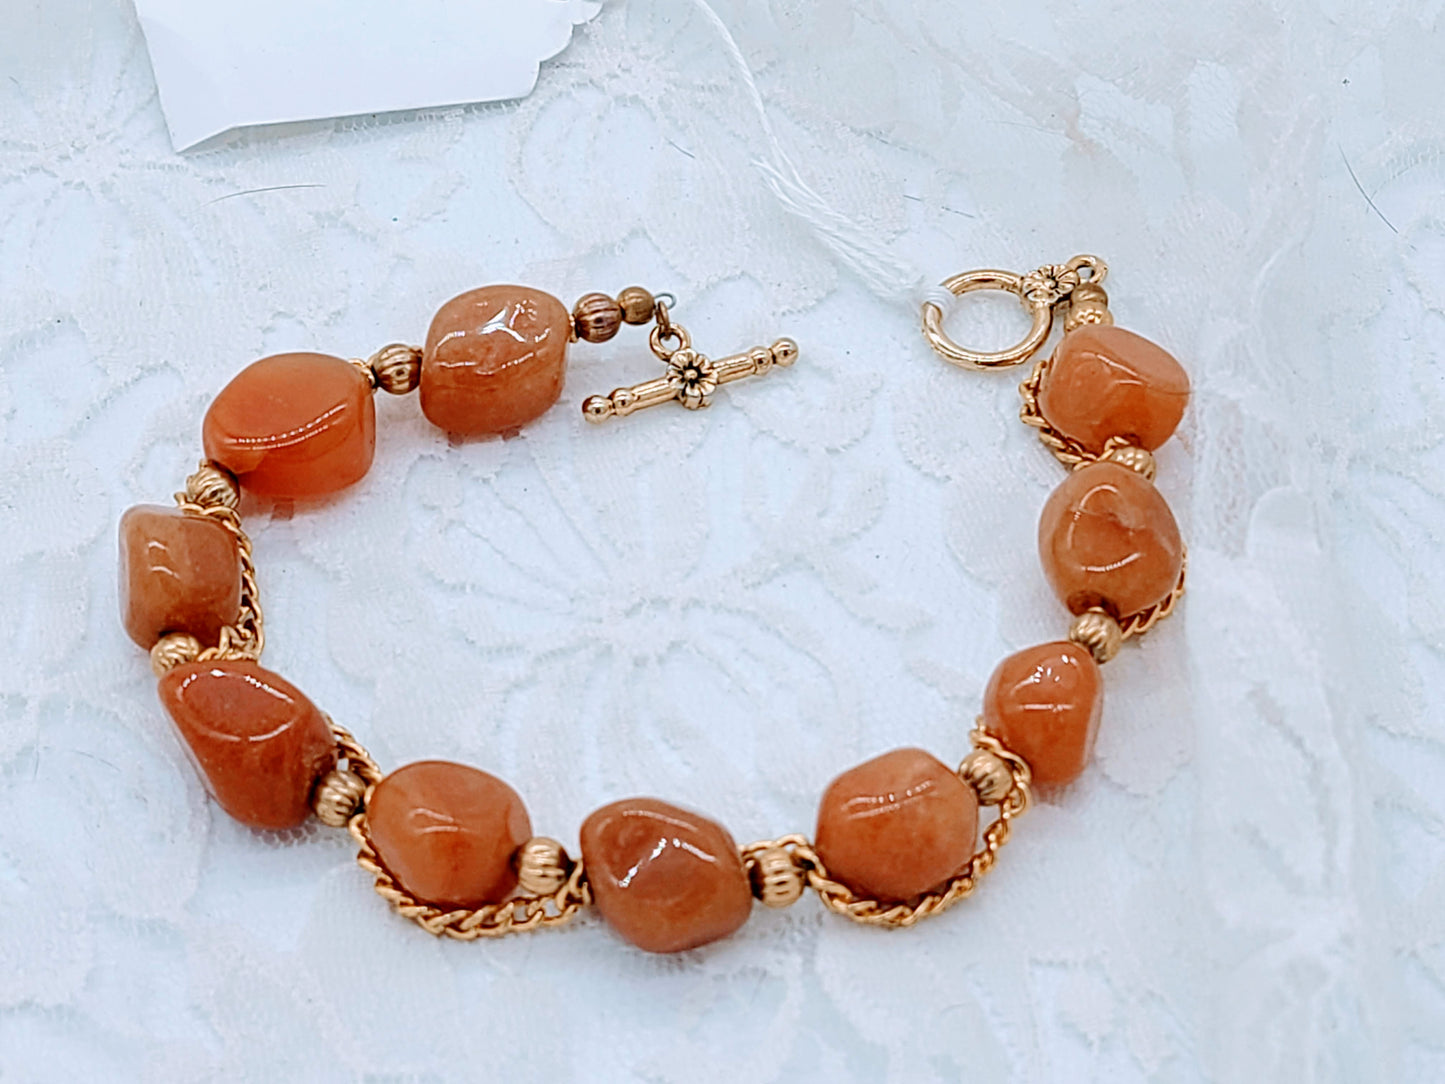 OOAK Bracelet Handmade Beaded Orange Carnelian Bracelet ~ Plus size 9.5" Authentic Gemstone and Gold Tone Accents Bracelet